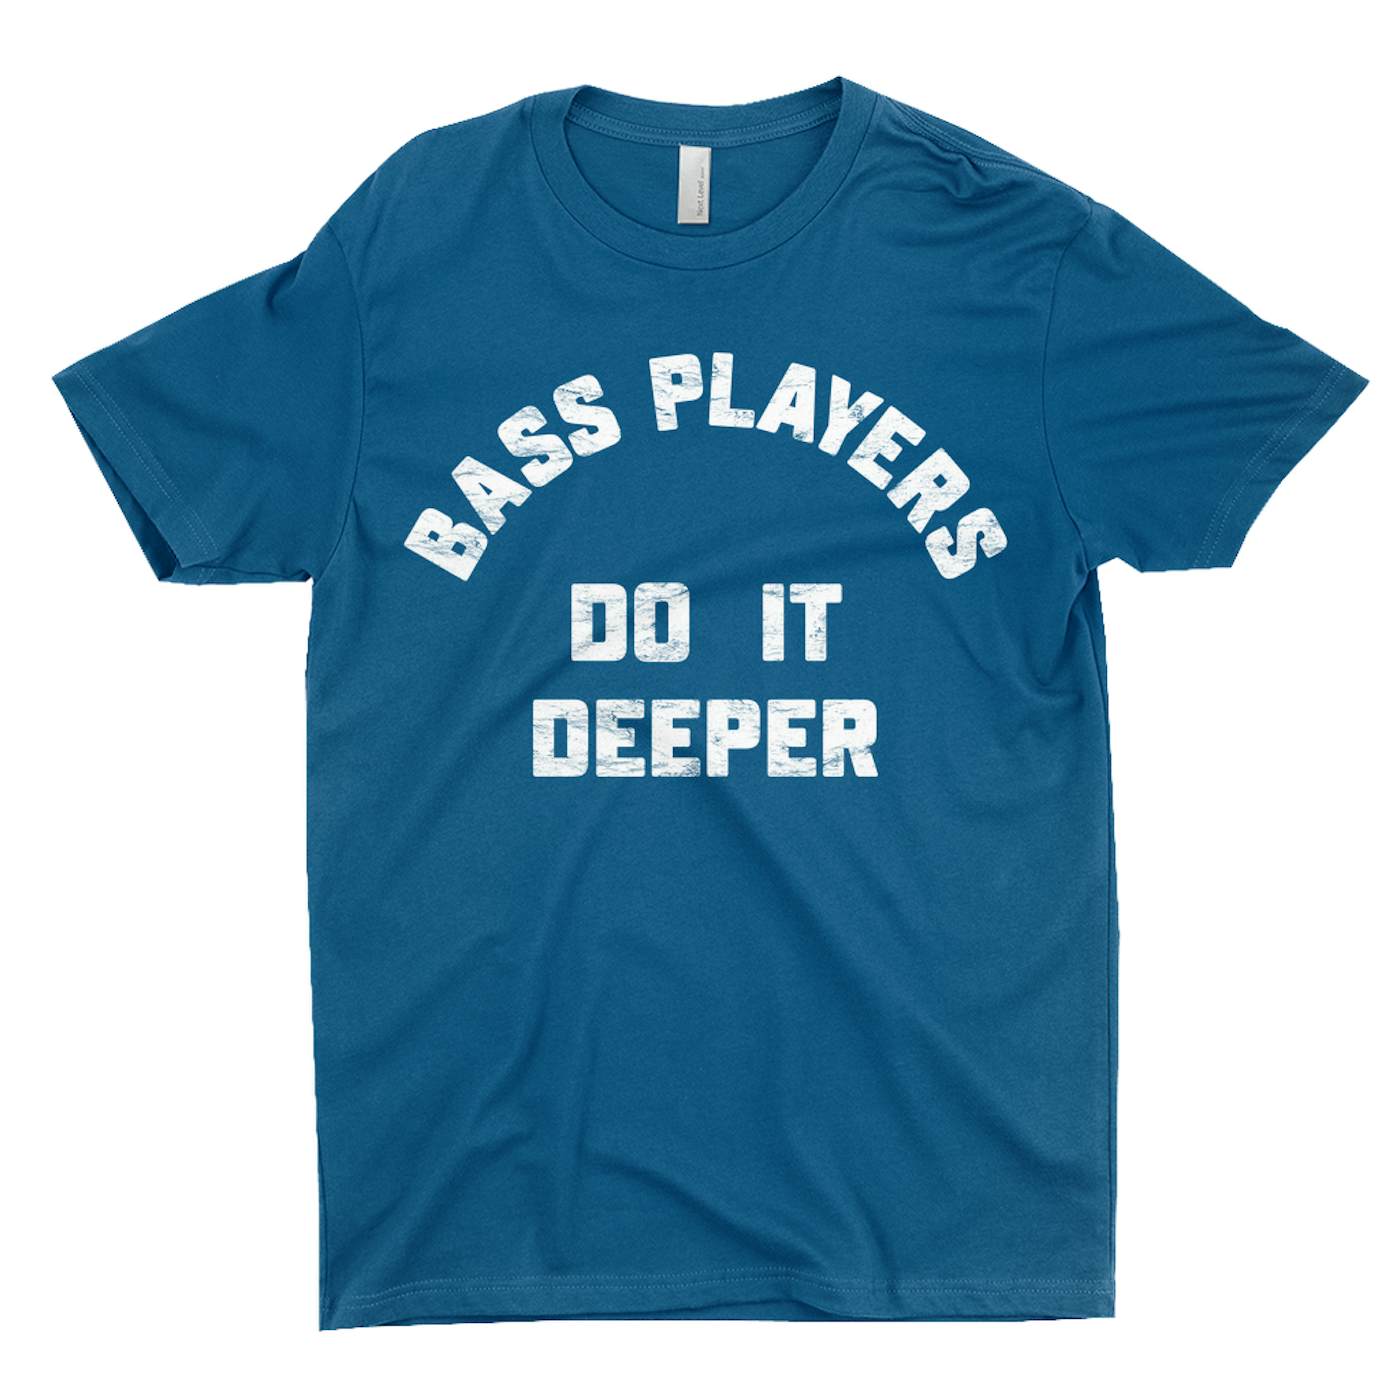 Def Leppard T-Shirt | Bass Players Do It Worn by Rick Savage Def Leppard Shirt